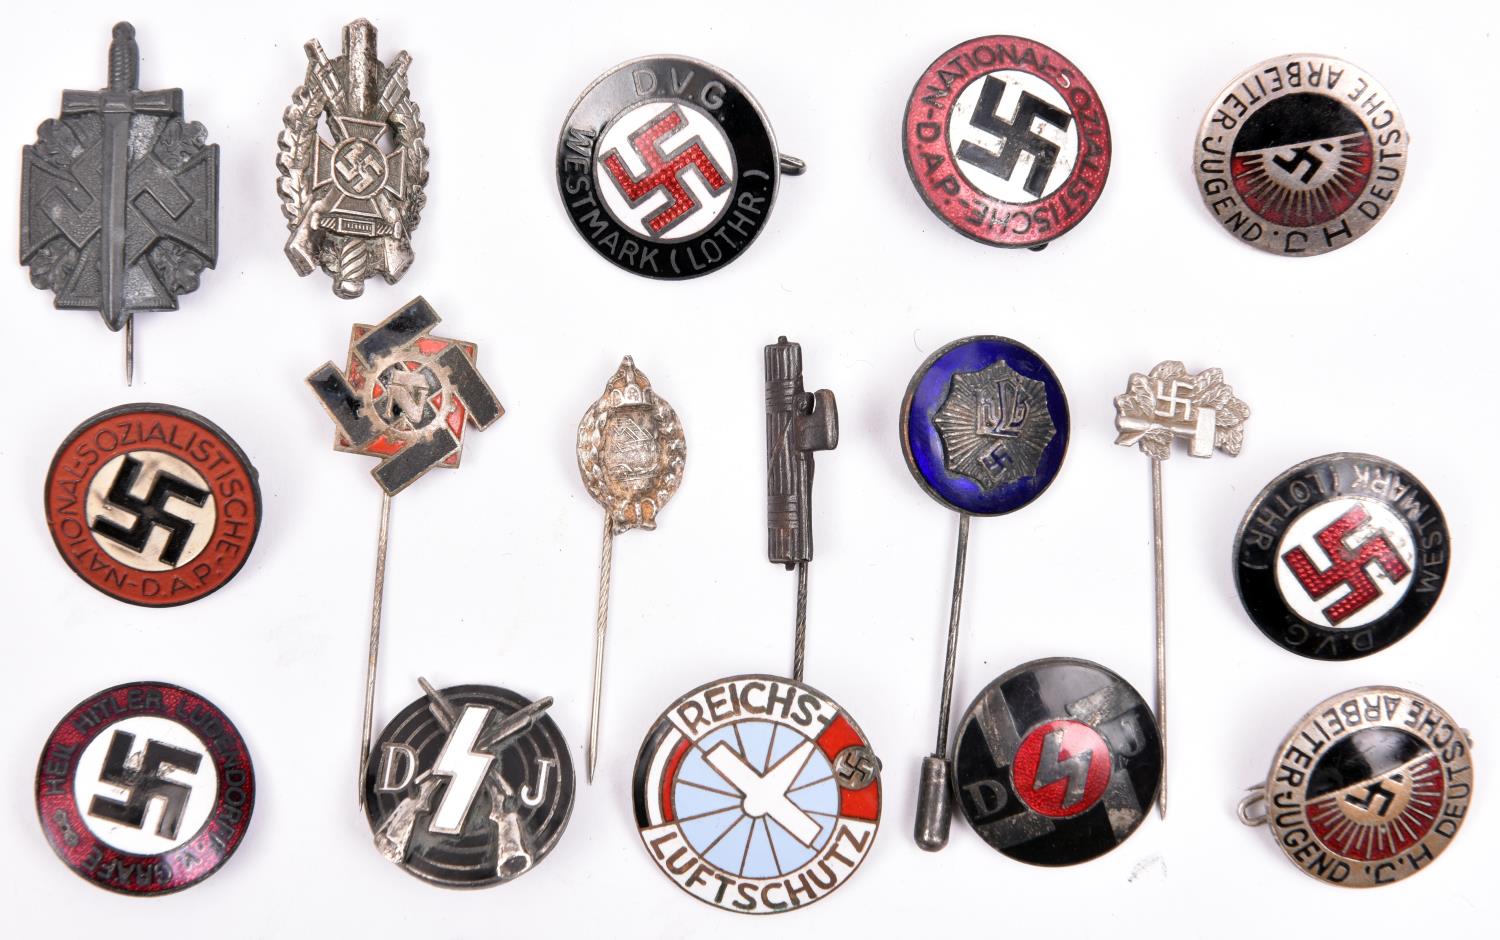 9 Third Reich circular enamelled pin back badges, including “Reichs Luftschutz”; Hitler Youth